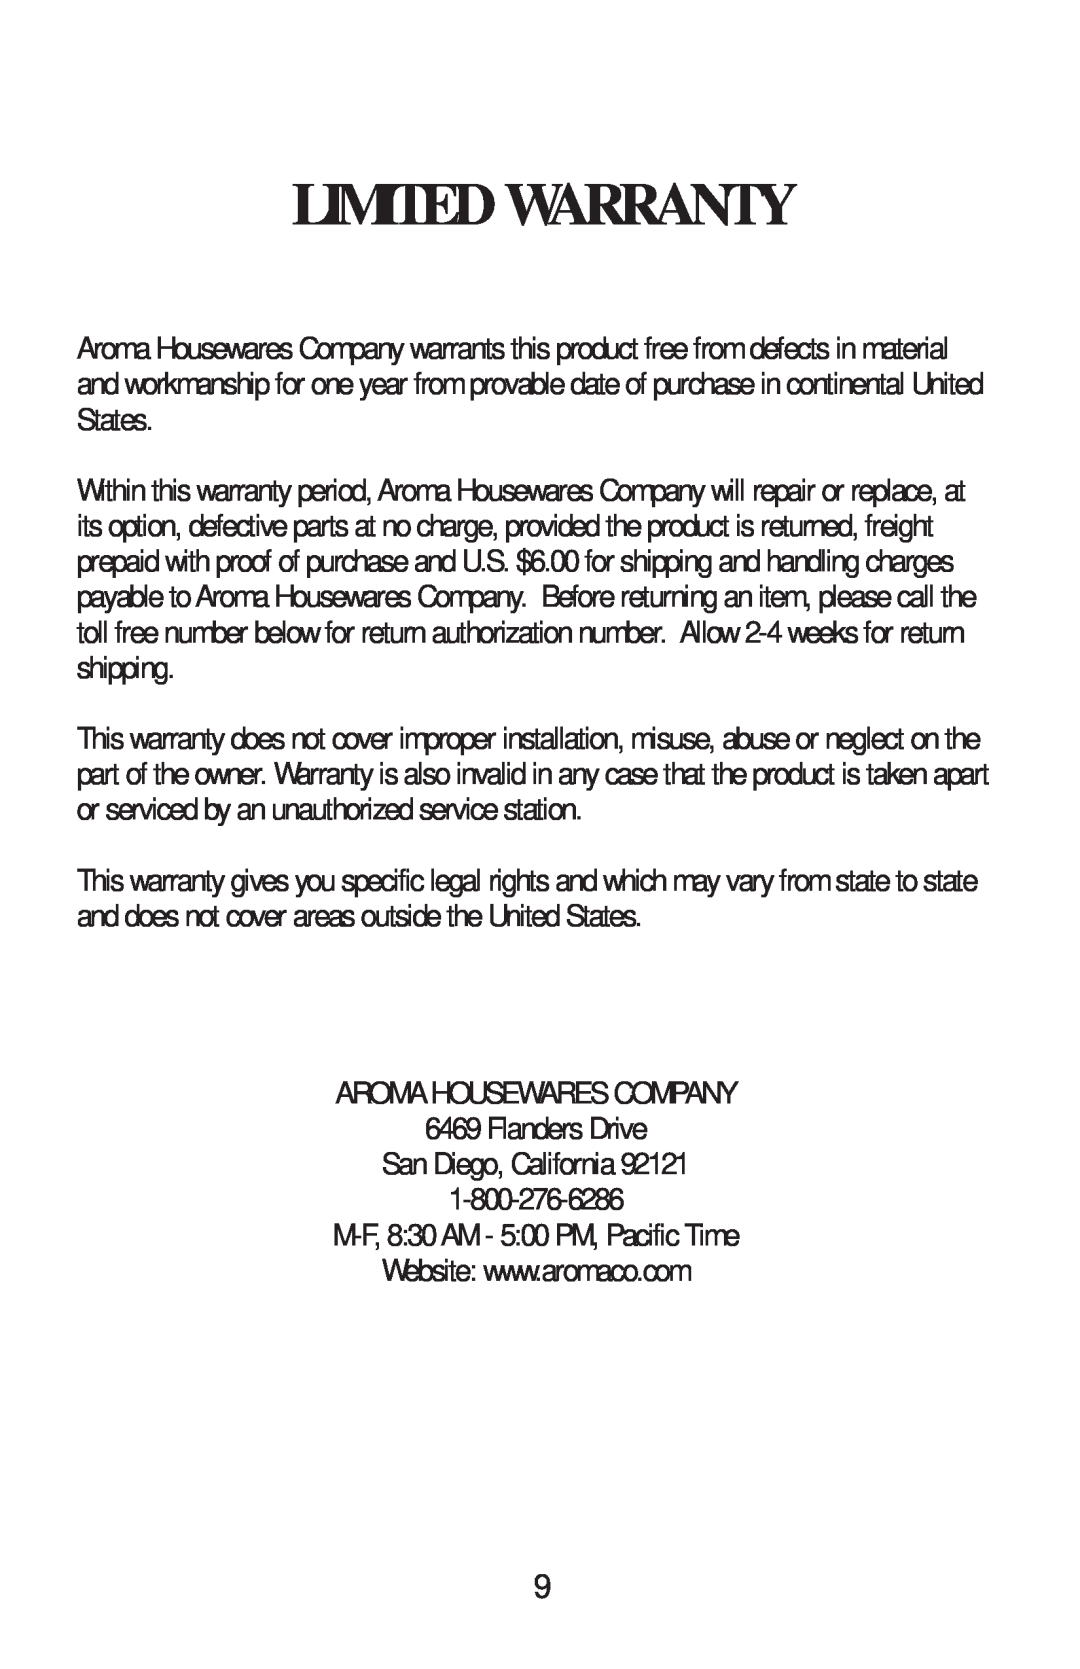 Aroma ARC-700 instruction manual Limited Warranty, AROMA HOUSEWARES COMPANY 6469 Flanders Drive, San Diego, California 